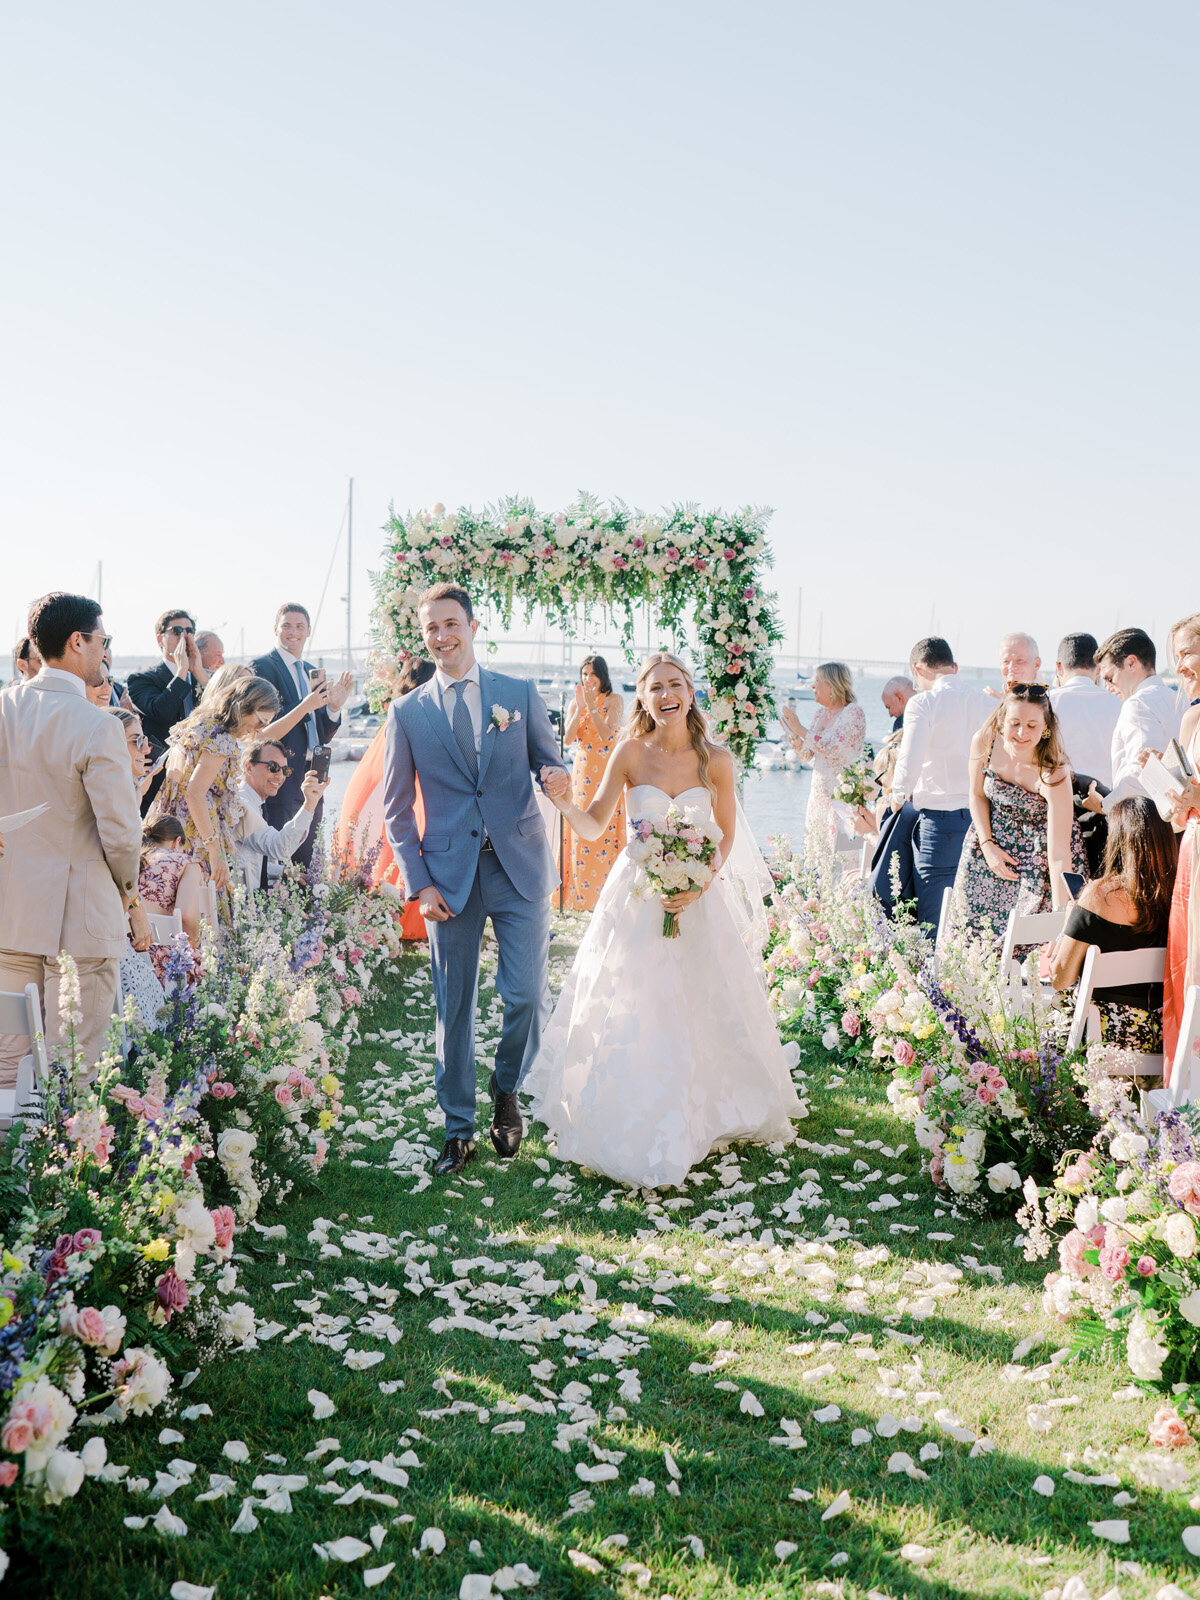 Kate-Murtaugh-Events-Newport-bride-groom-walking-down-the-aisle